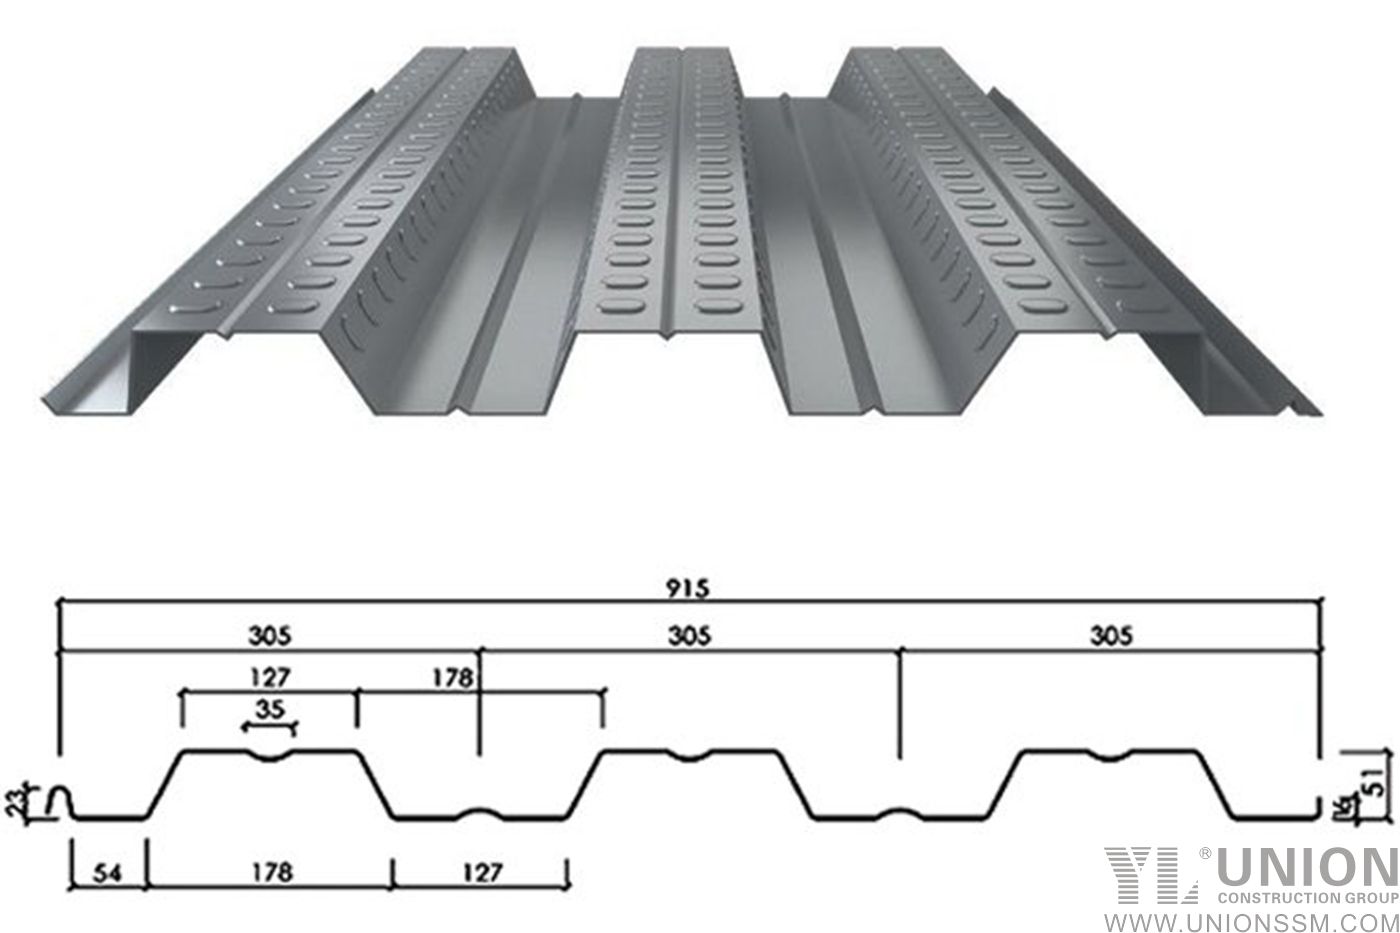 YL51-305-915梯形型材複合鋪面板